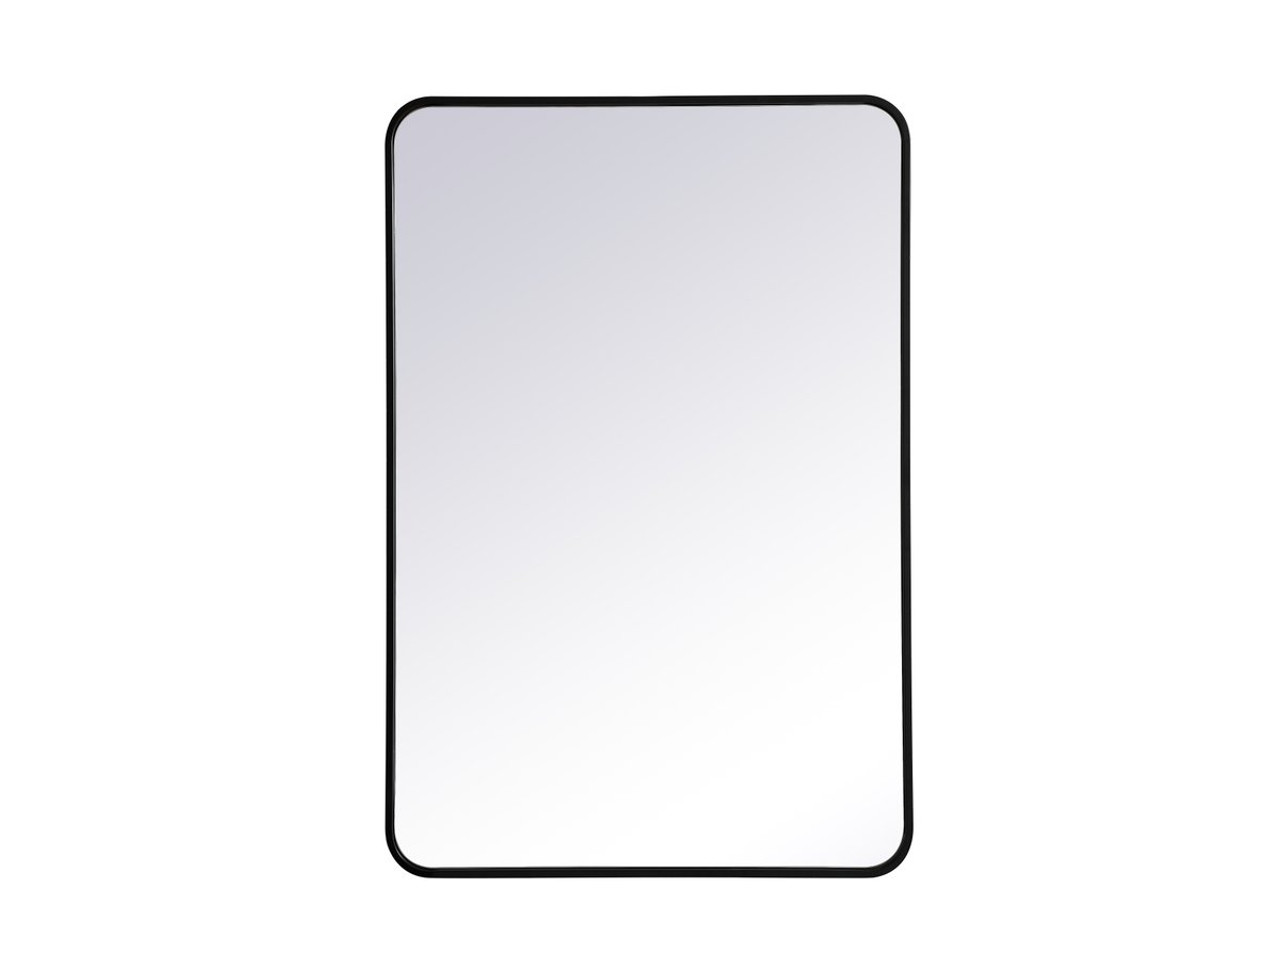 Elegant Decor MR802740BK Soft corner metal rectangular mirror 27x40 inch in Black